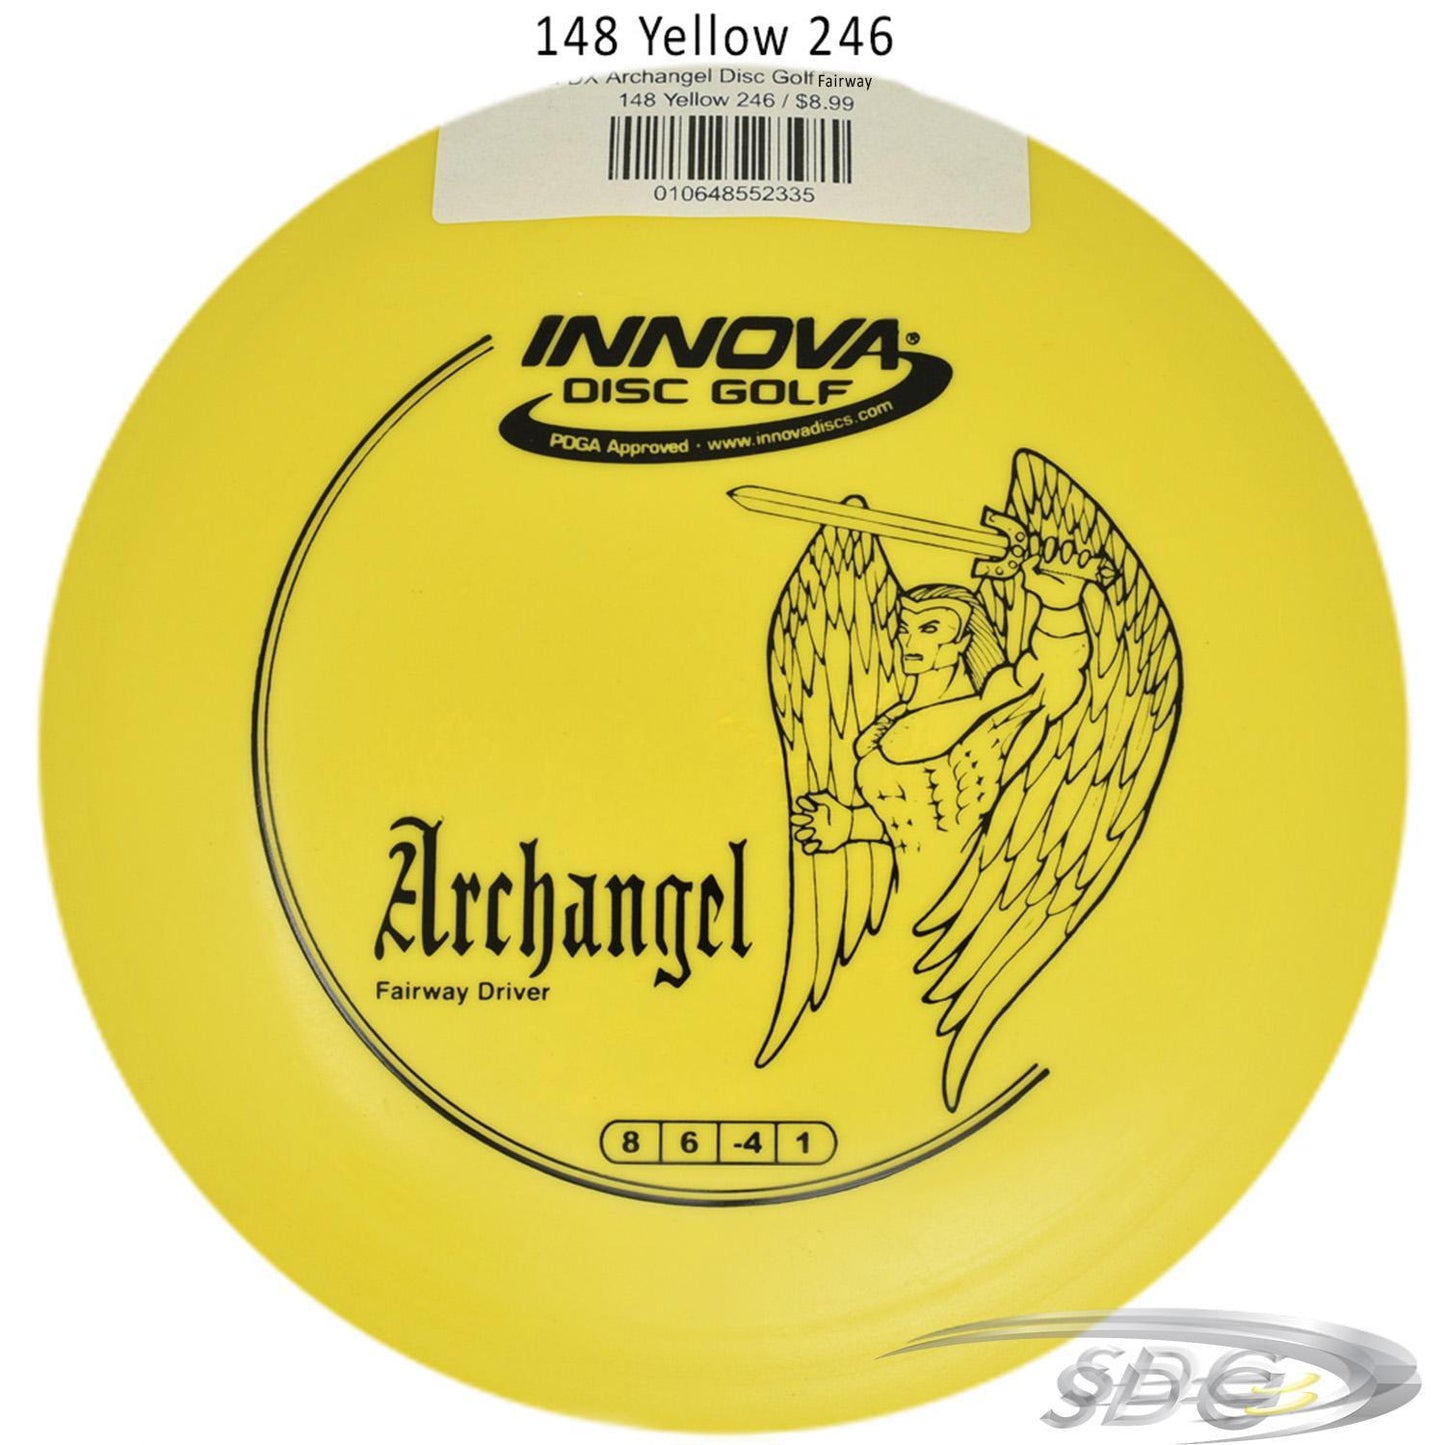 innova-dx-archangel-disc-golf-fairway-driver 148 Yellow 246 